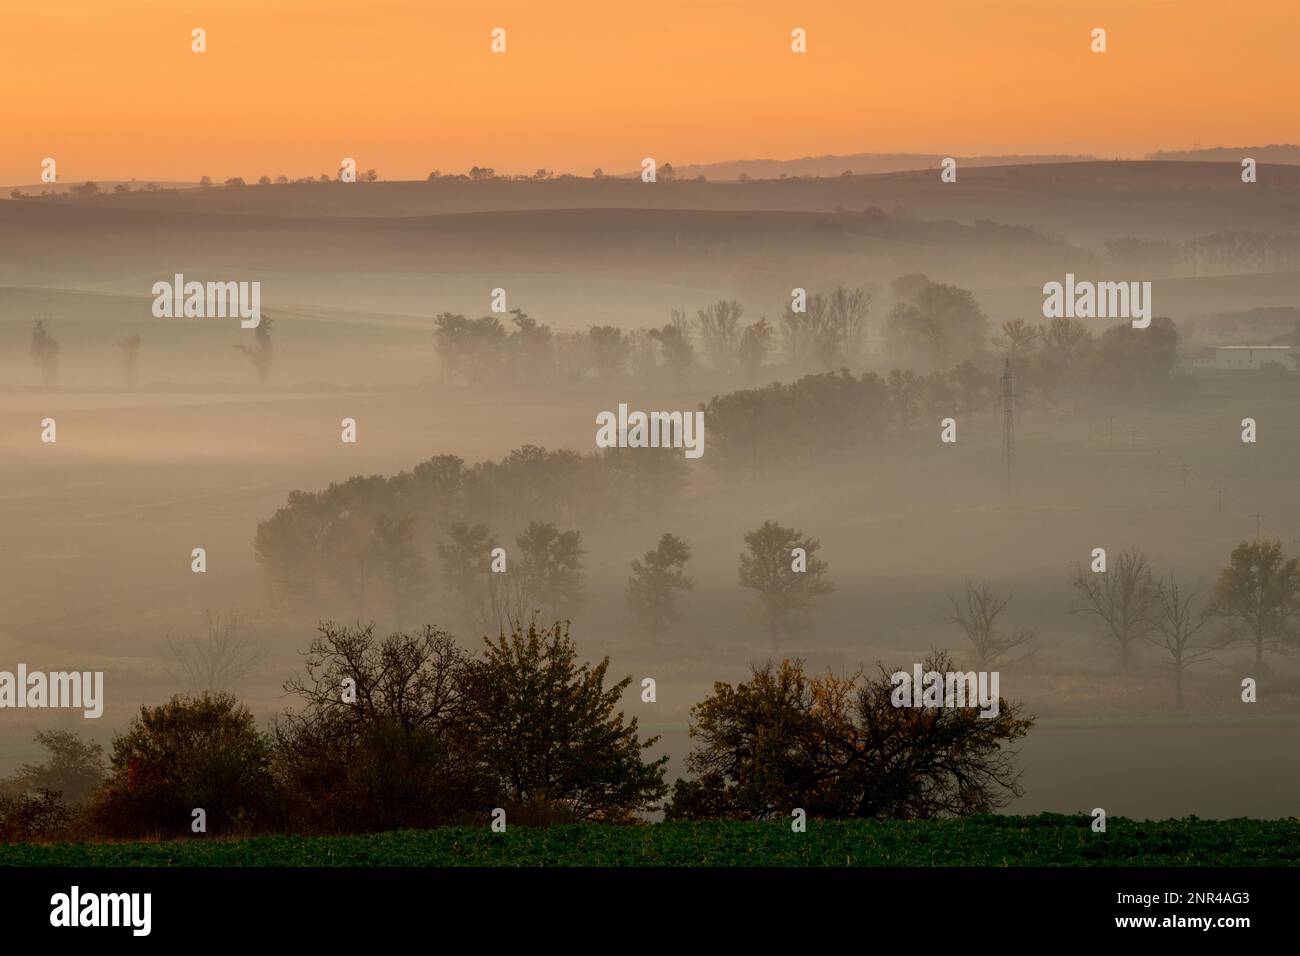 Beautiful Moravian fields with avenues of trees shrouded in morning fog. Czech republic, Moravian, Czech republic Stock Photo